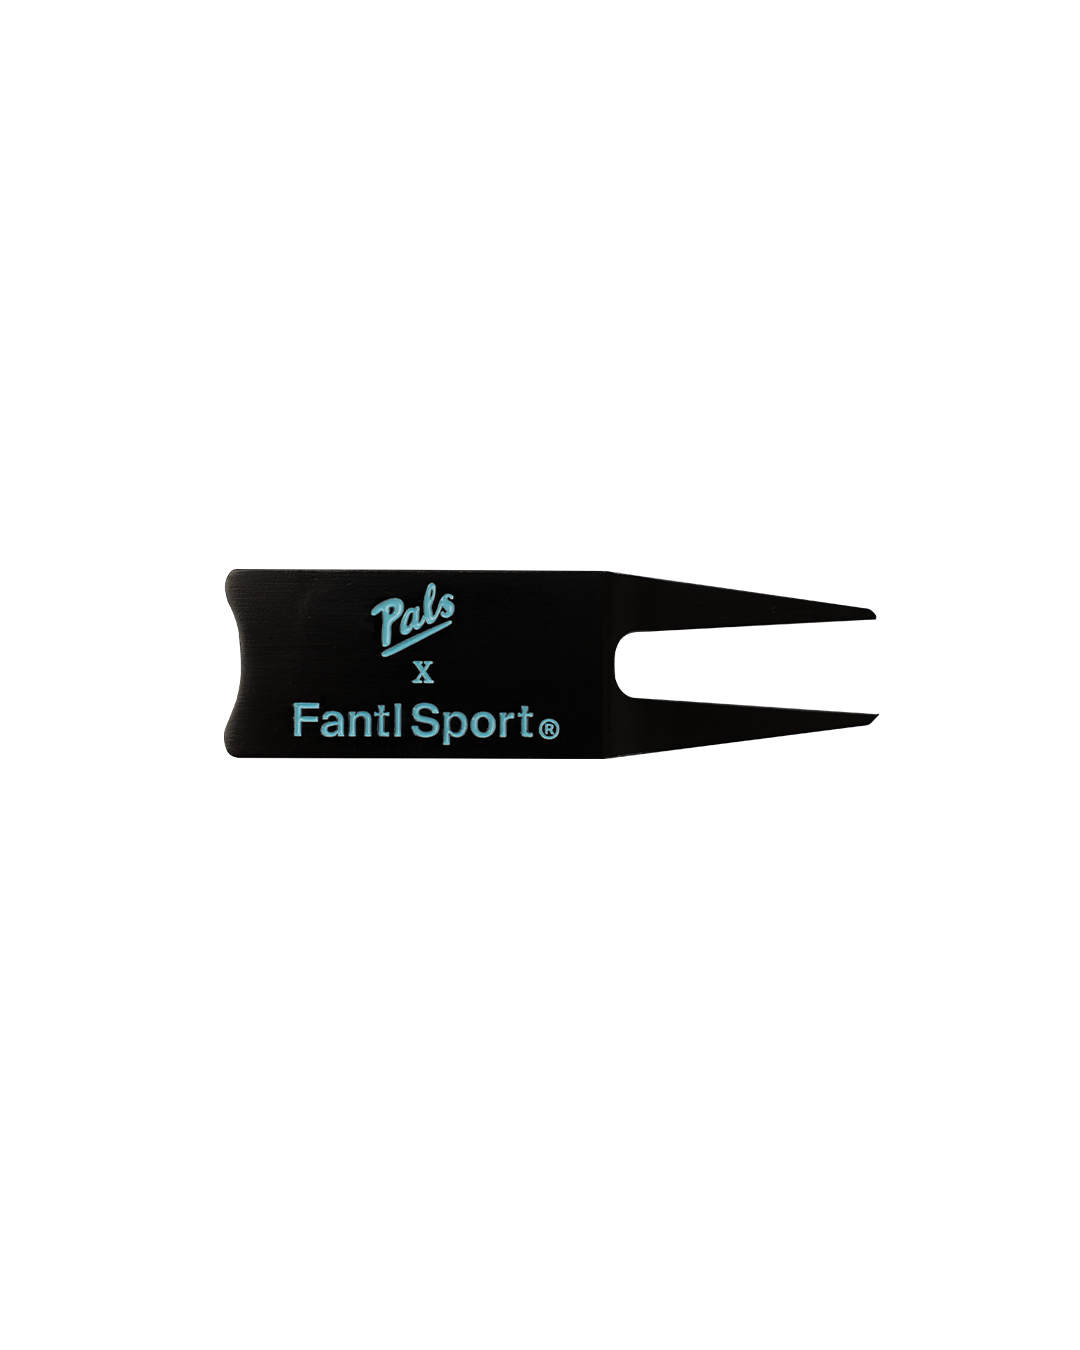 Fantl Sport x Pals Pitch Repair